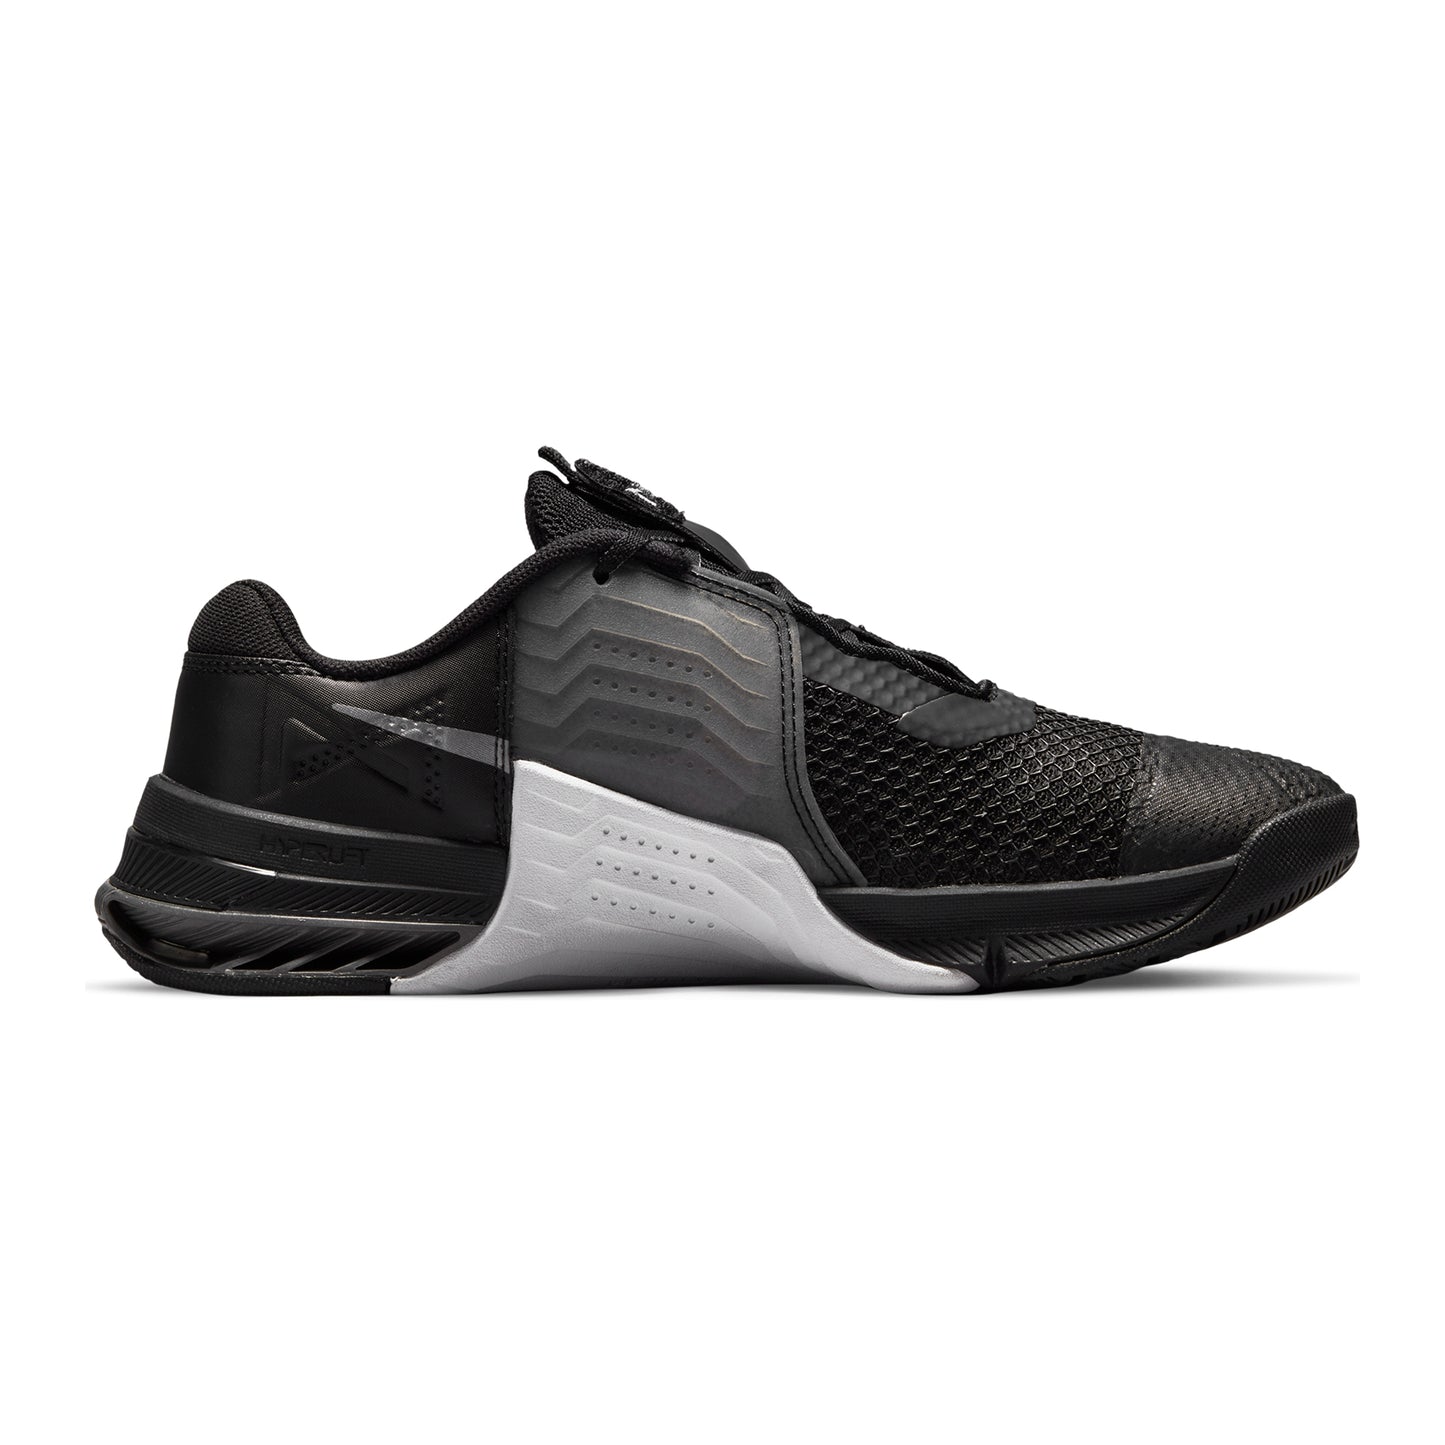 Women's Nike Metcon 7 Cross Training Shoe - Black/Pure Platinum/Particle Grey - Regular (B)